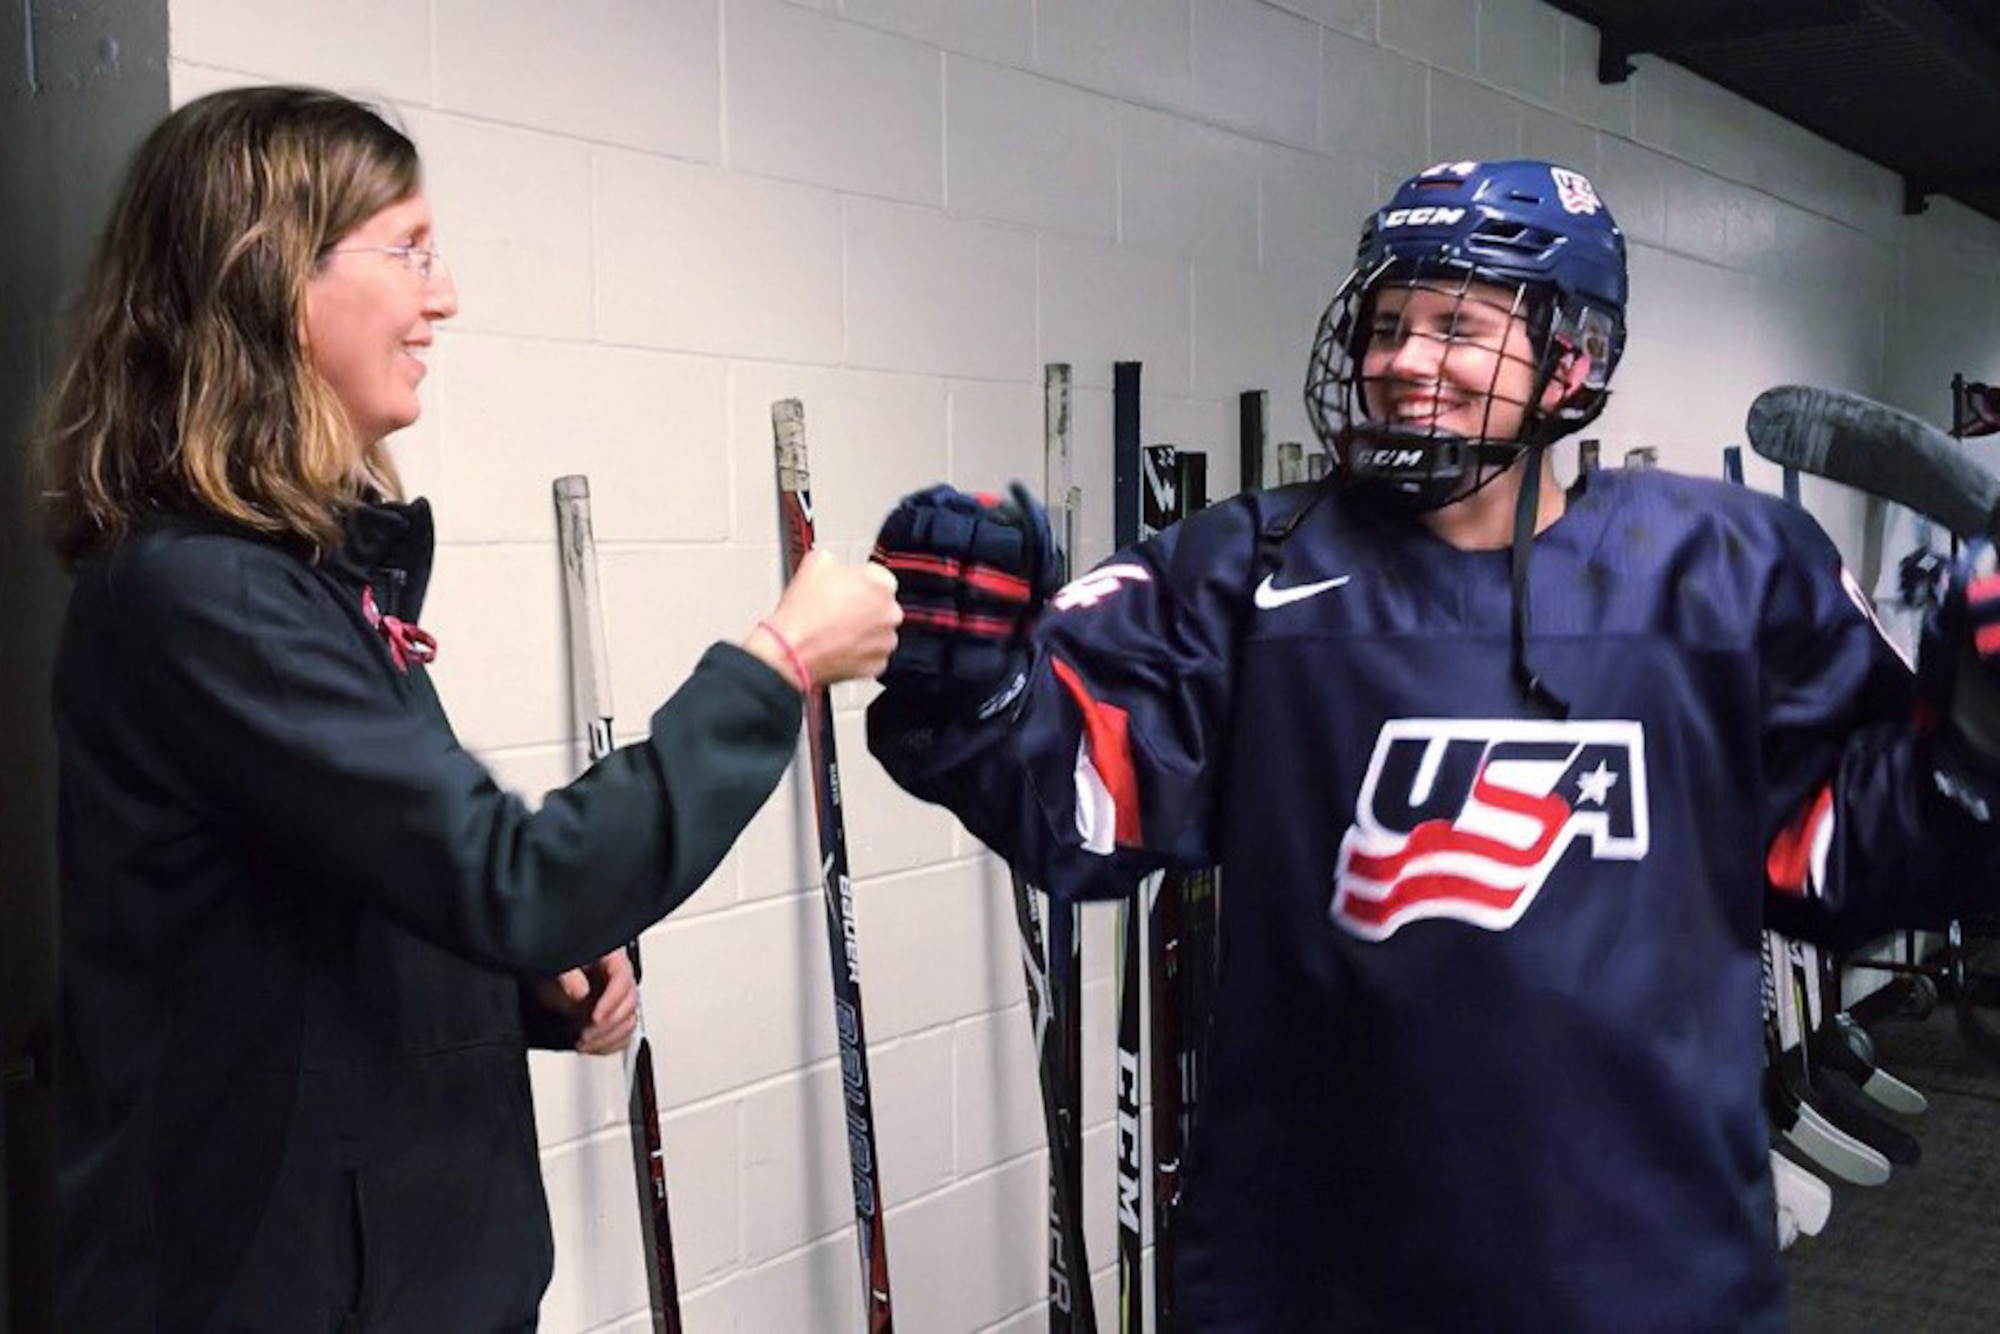 A woman fist bumps a female hockey player.